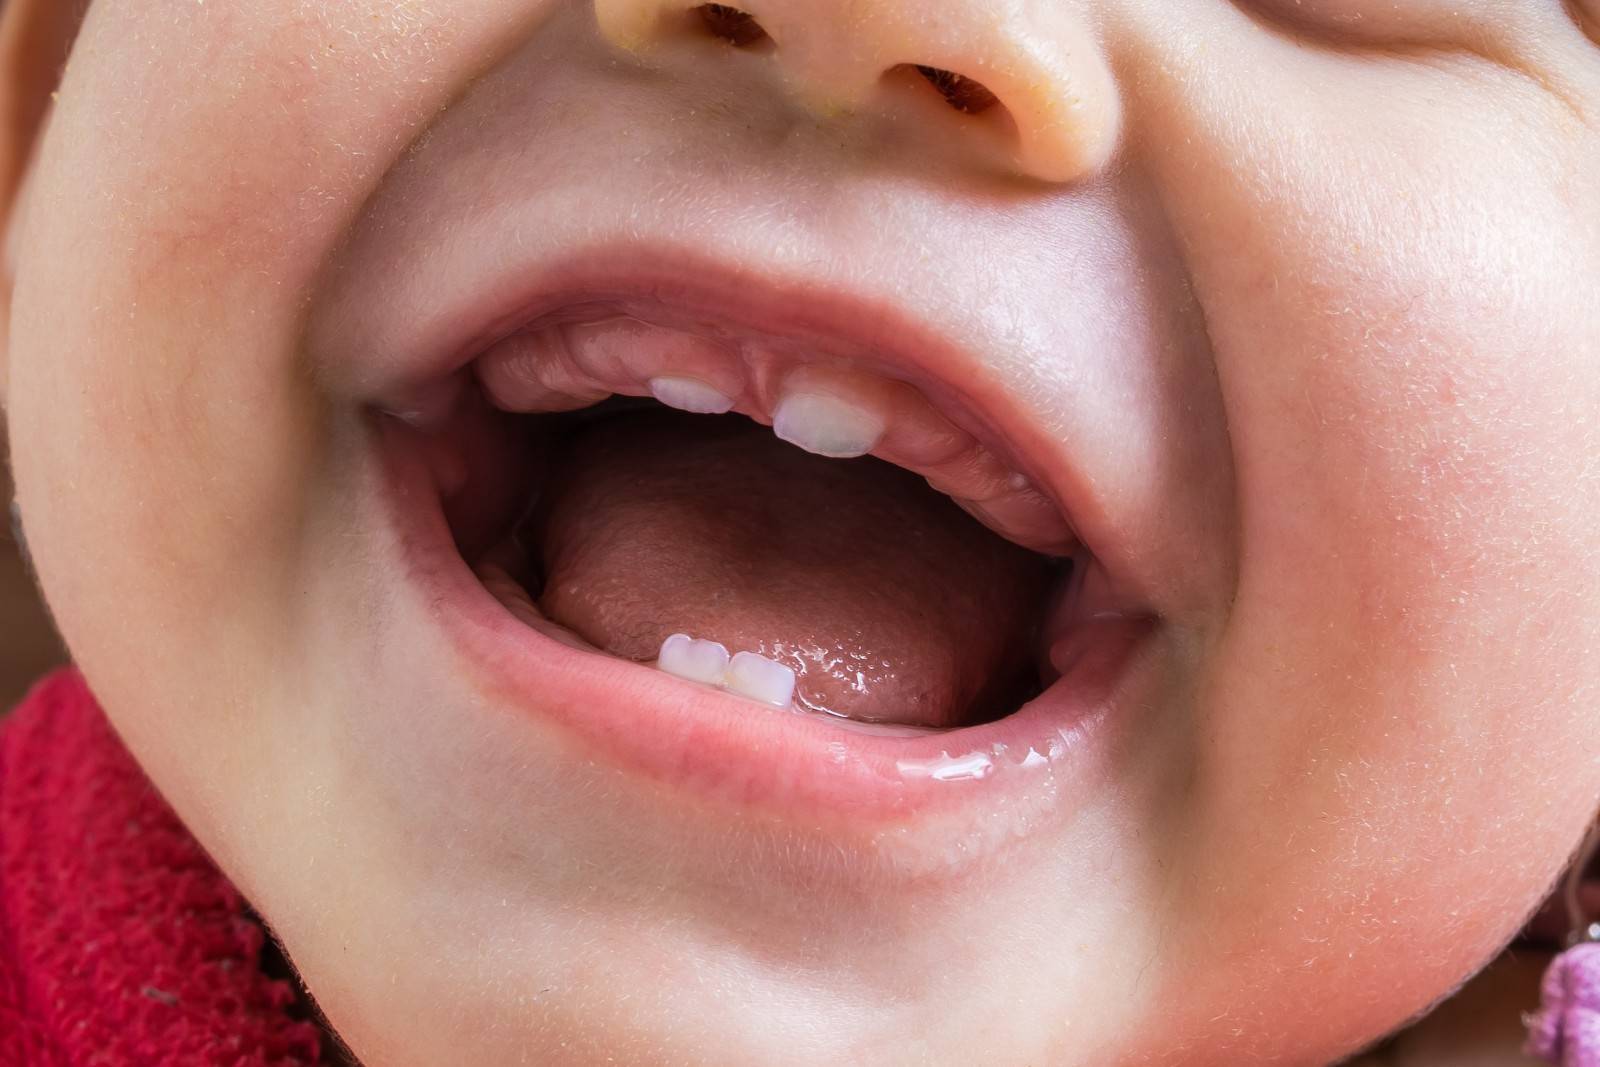 Режутся зубы у ребенка во сколько месяцев